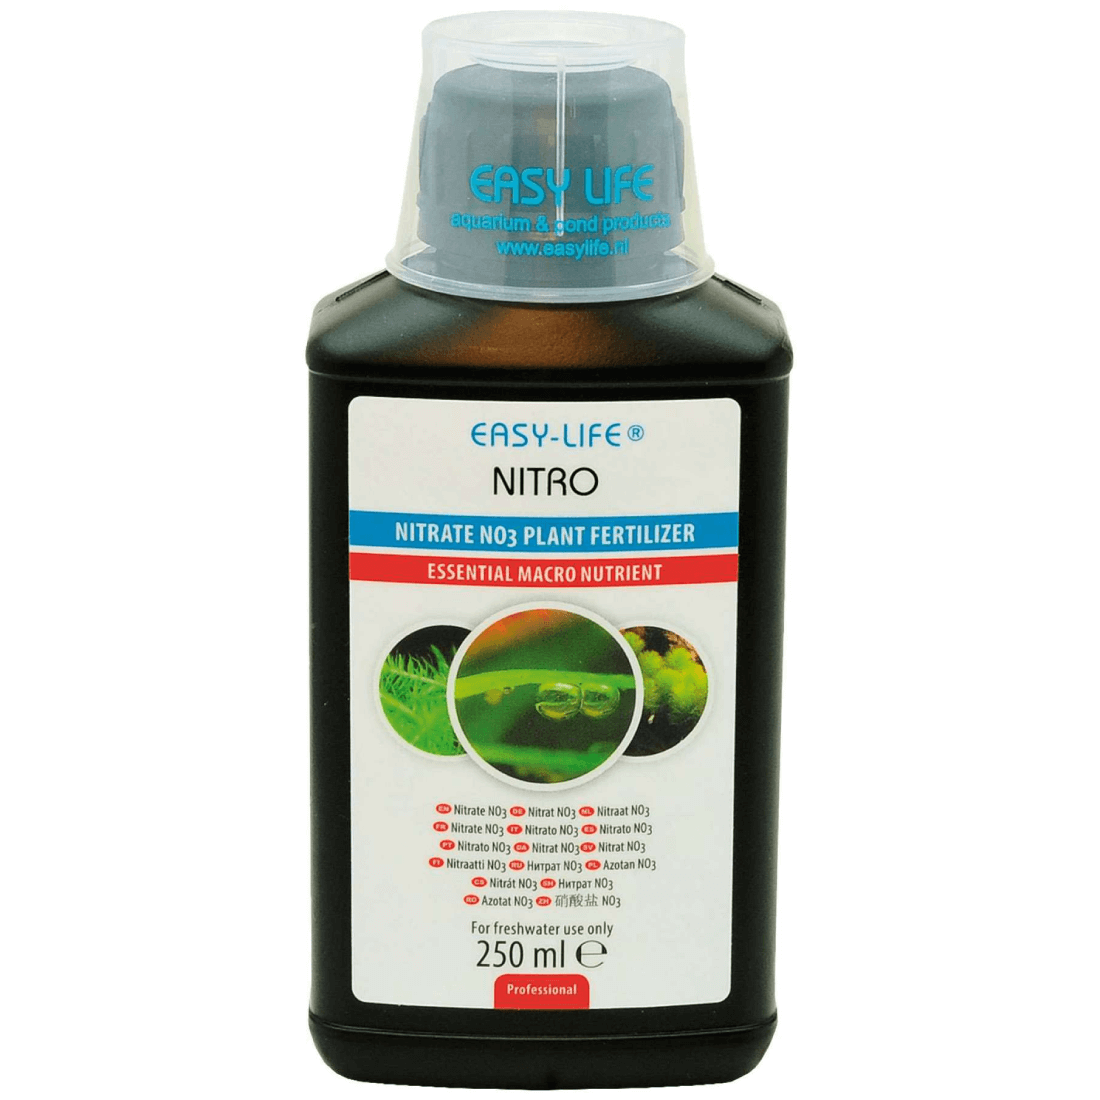 Solutie fertilizanta pentru plante Easy Life Nitro 250 ml